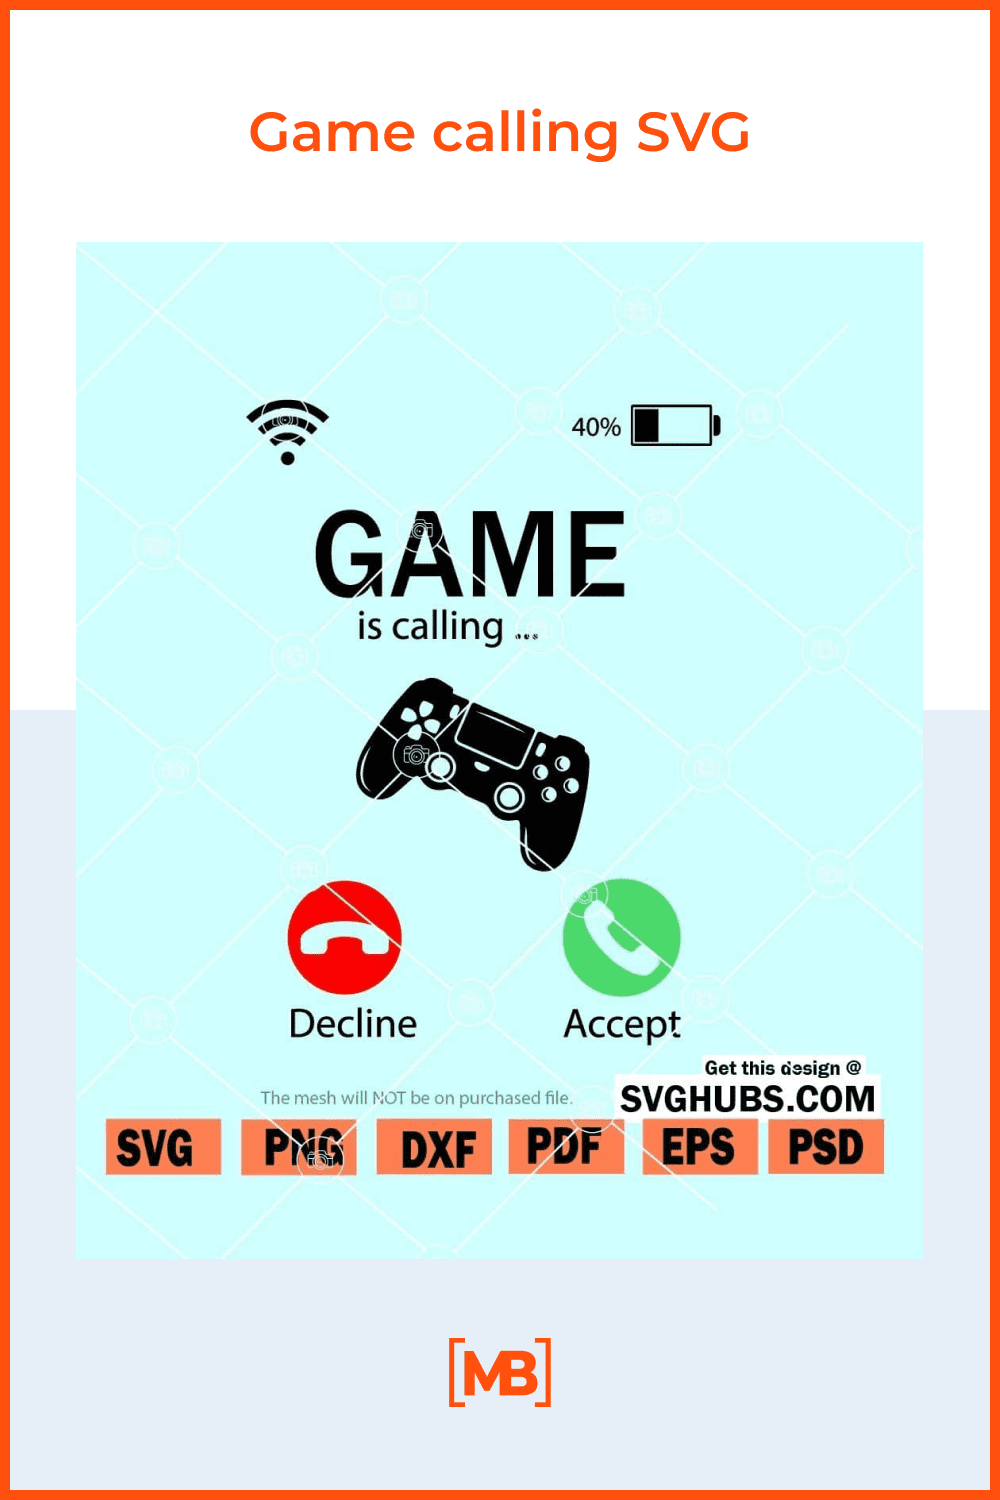 Game calling SVG.